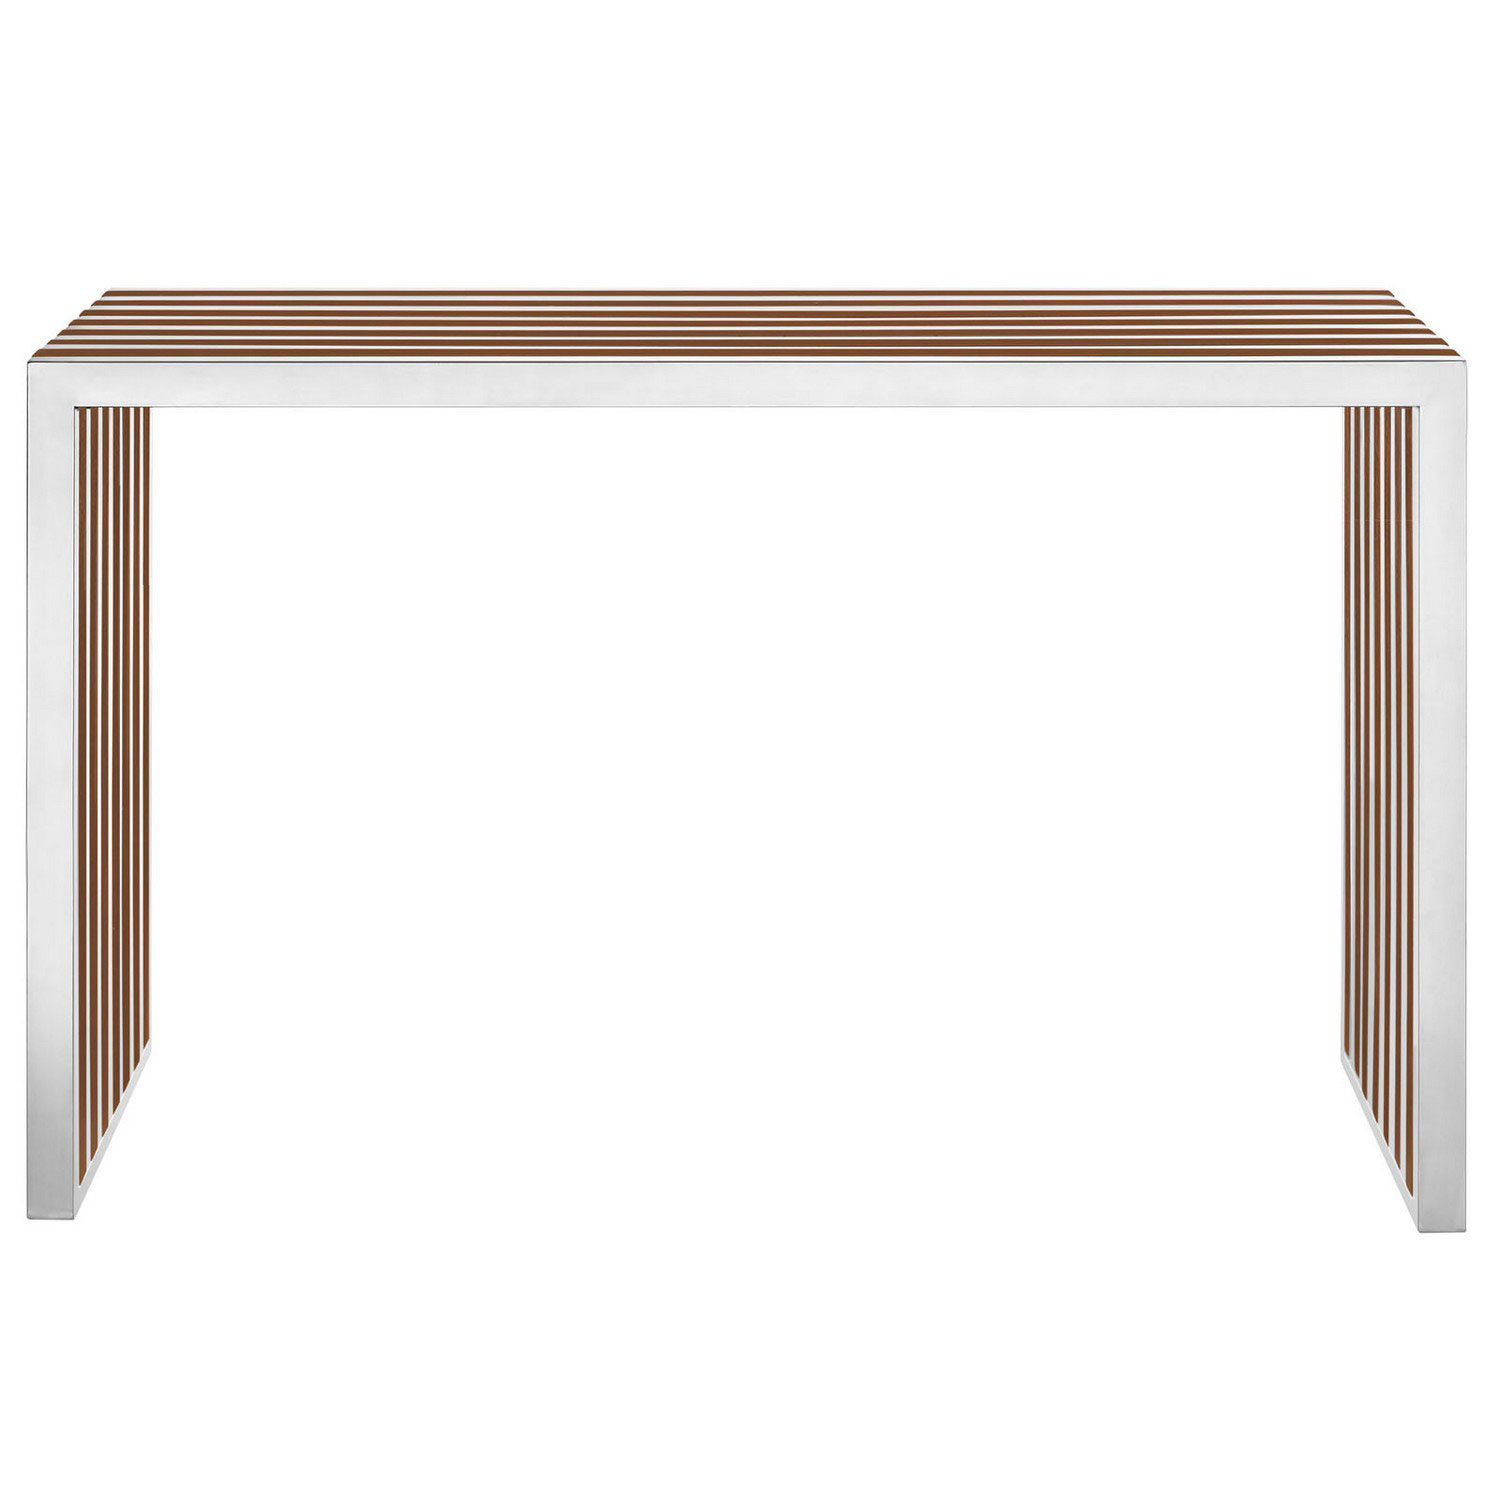 Modway Gridiron Wood Inlay Console Table - Walnut